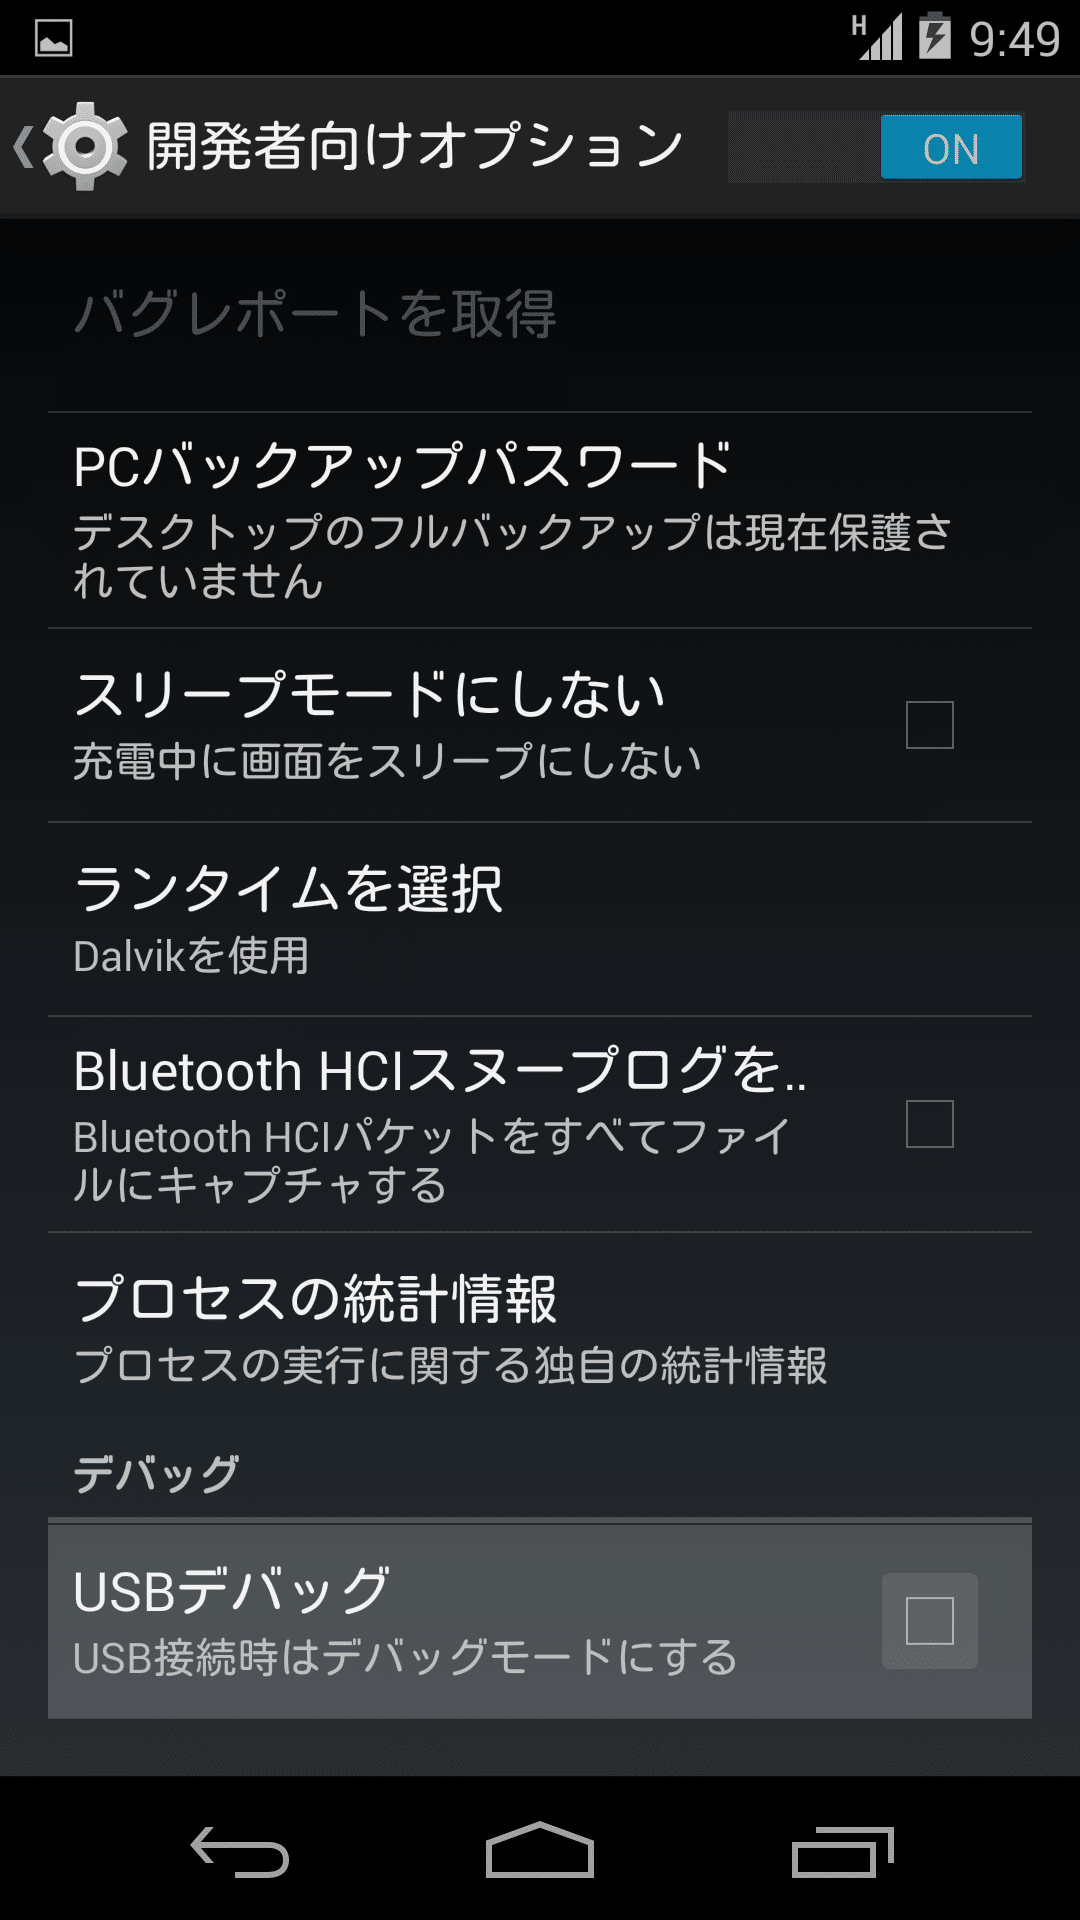 Nexus 5 developer options